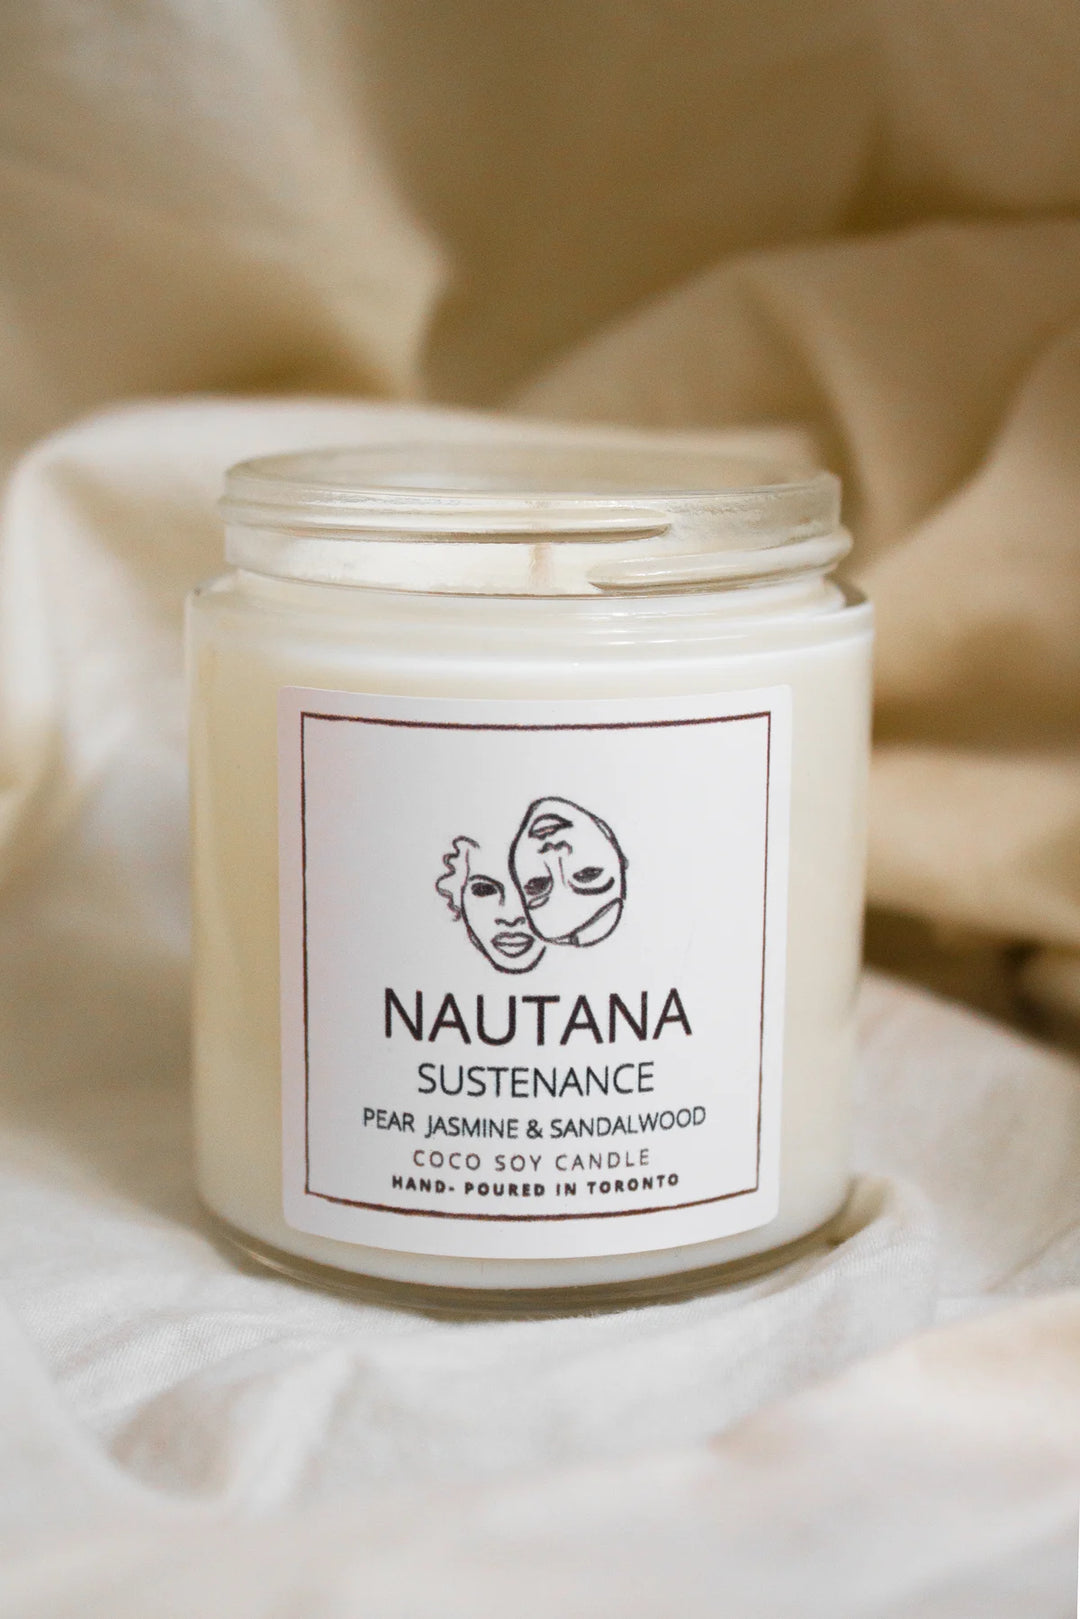 Nautana Sustenance Pear Jasmine & Sandlewood Coco Soy Candle